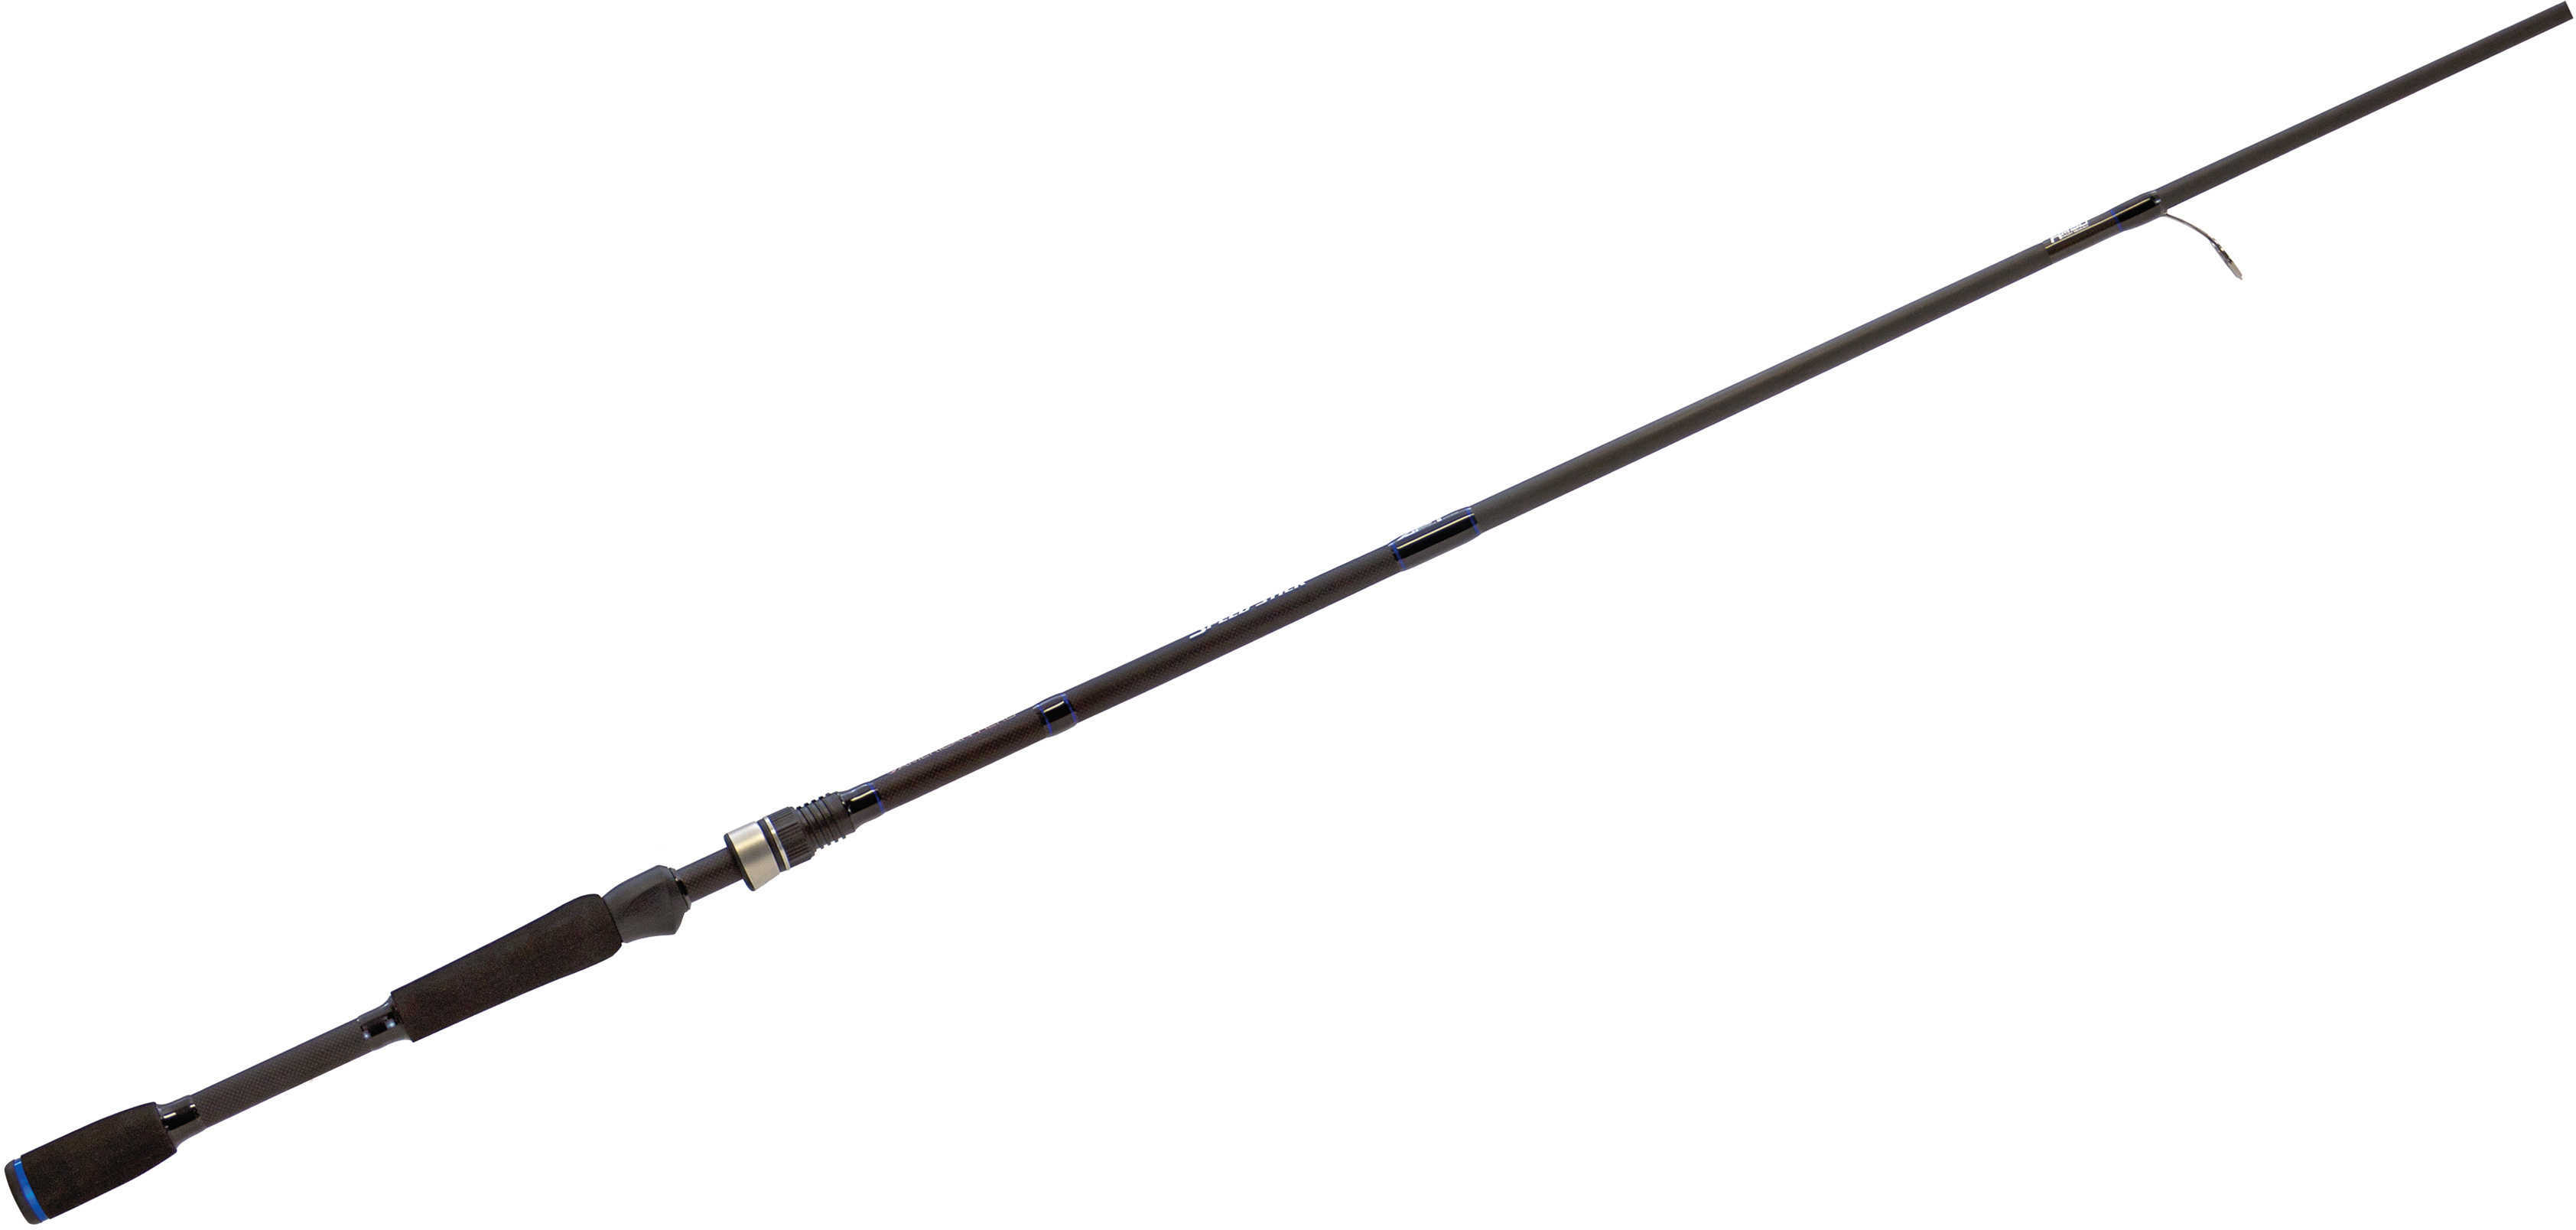 Lew's American Hero Speed Stick Rod Spinning, Medium/Heavy, 7' Md: AH70MHS